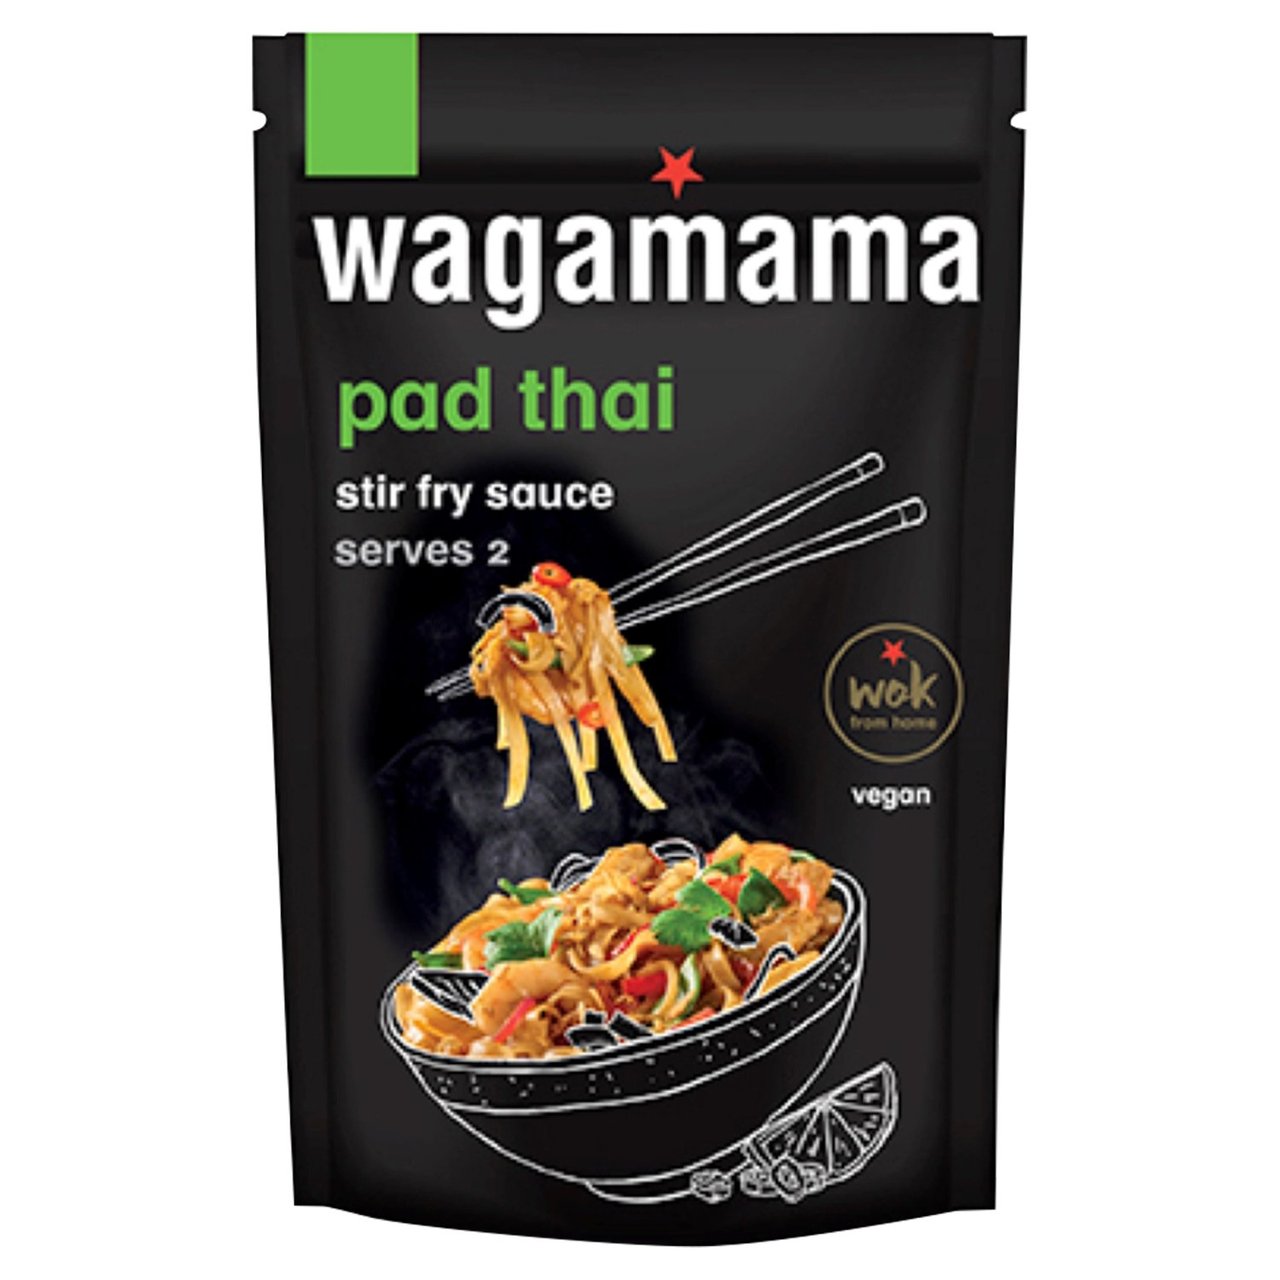 Wagamama Pad Thai Stir Fry Sauce